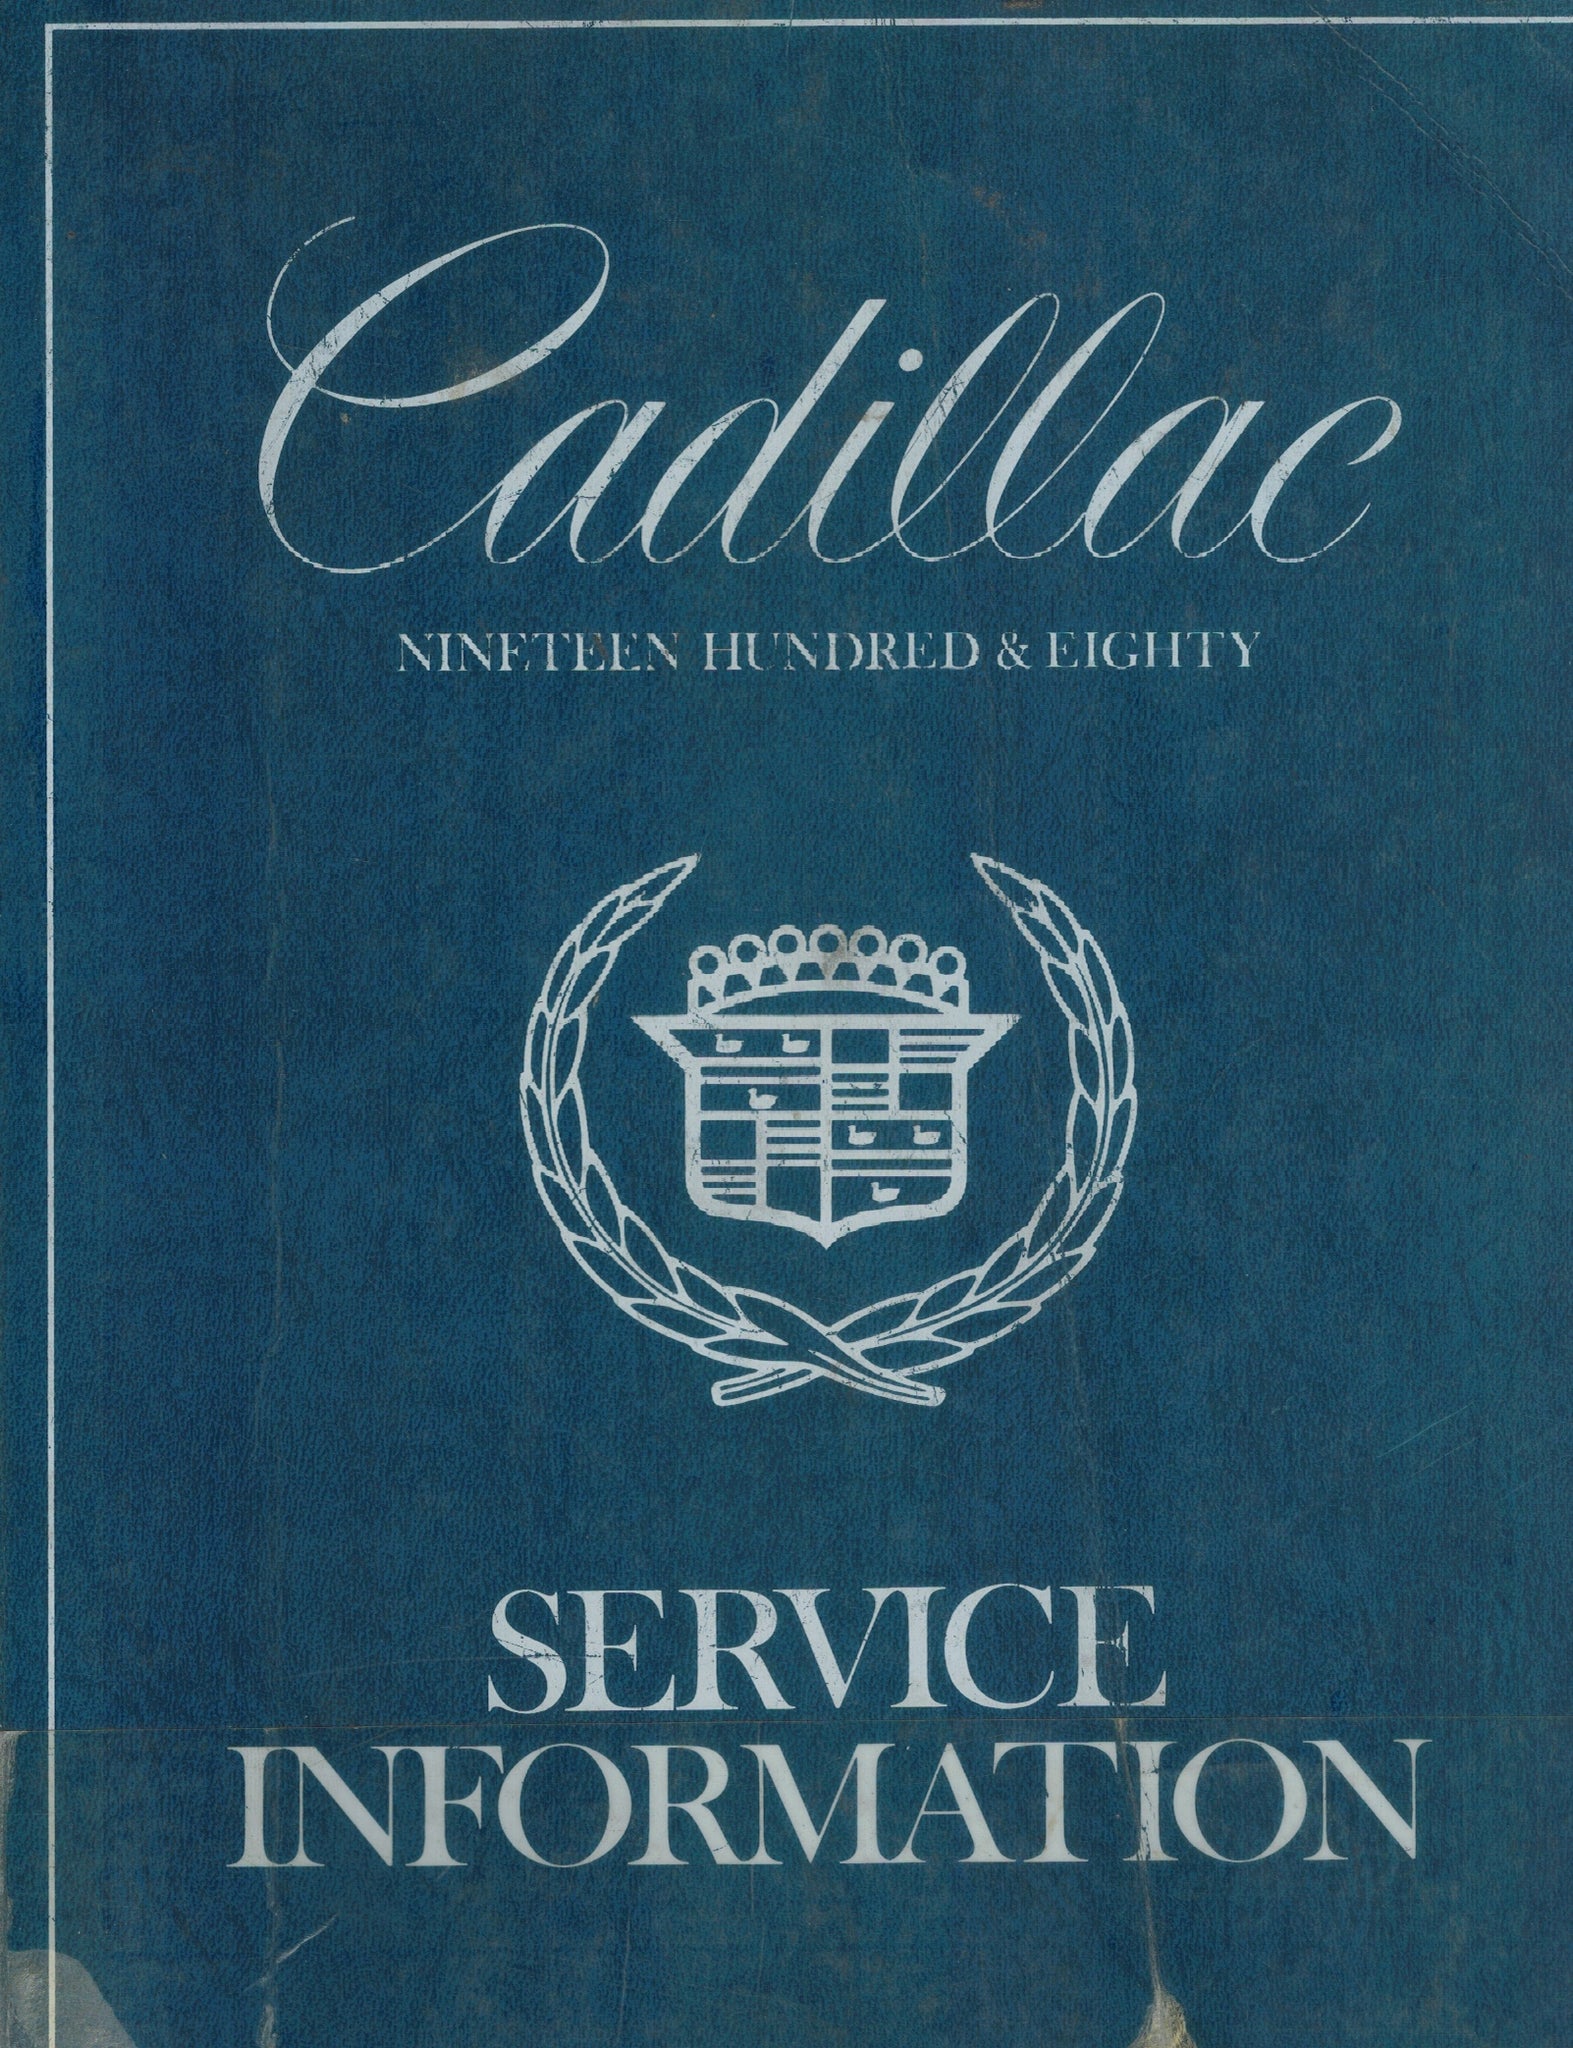 CADILLAC 1980 SERVICE INFORMATION